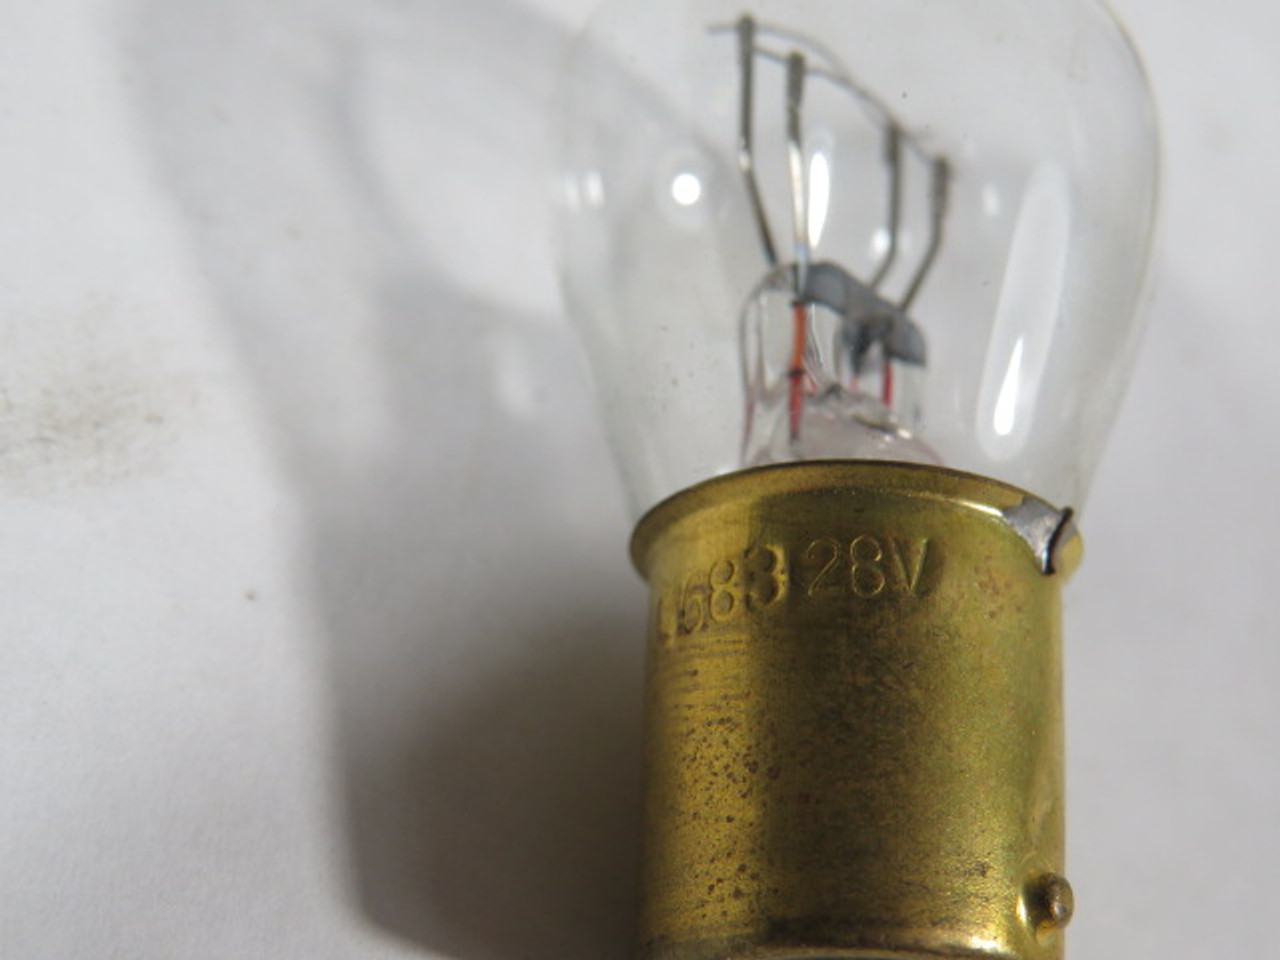 Generic 1683 Miniature Bulb BA15S Base 28V 1.02A 28.56W Lot of 8 USED